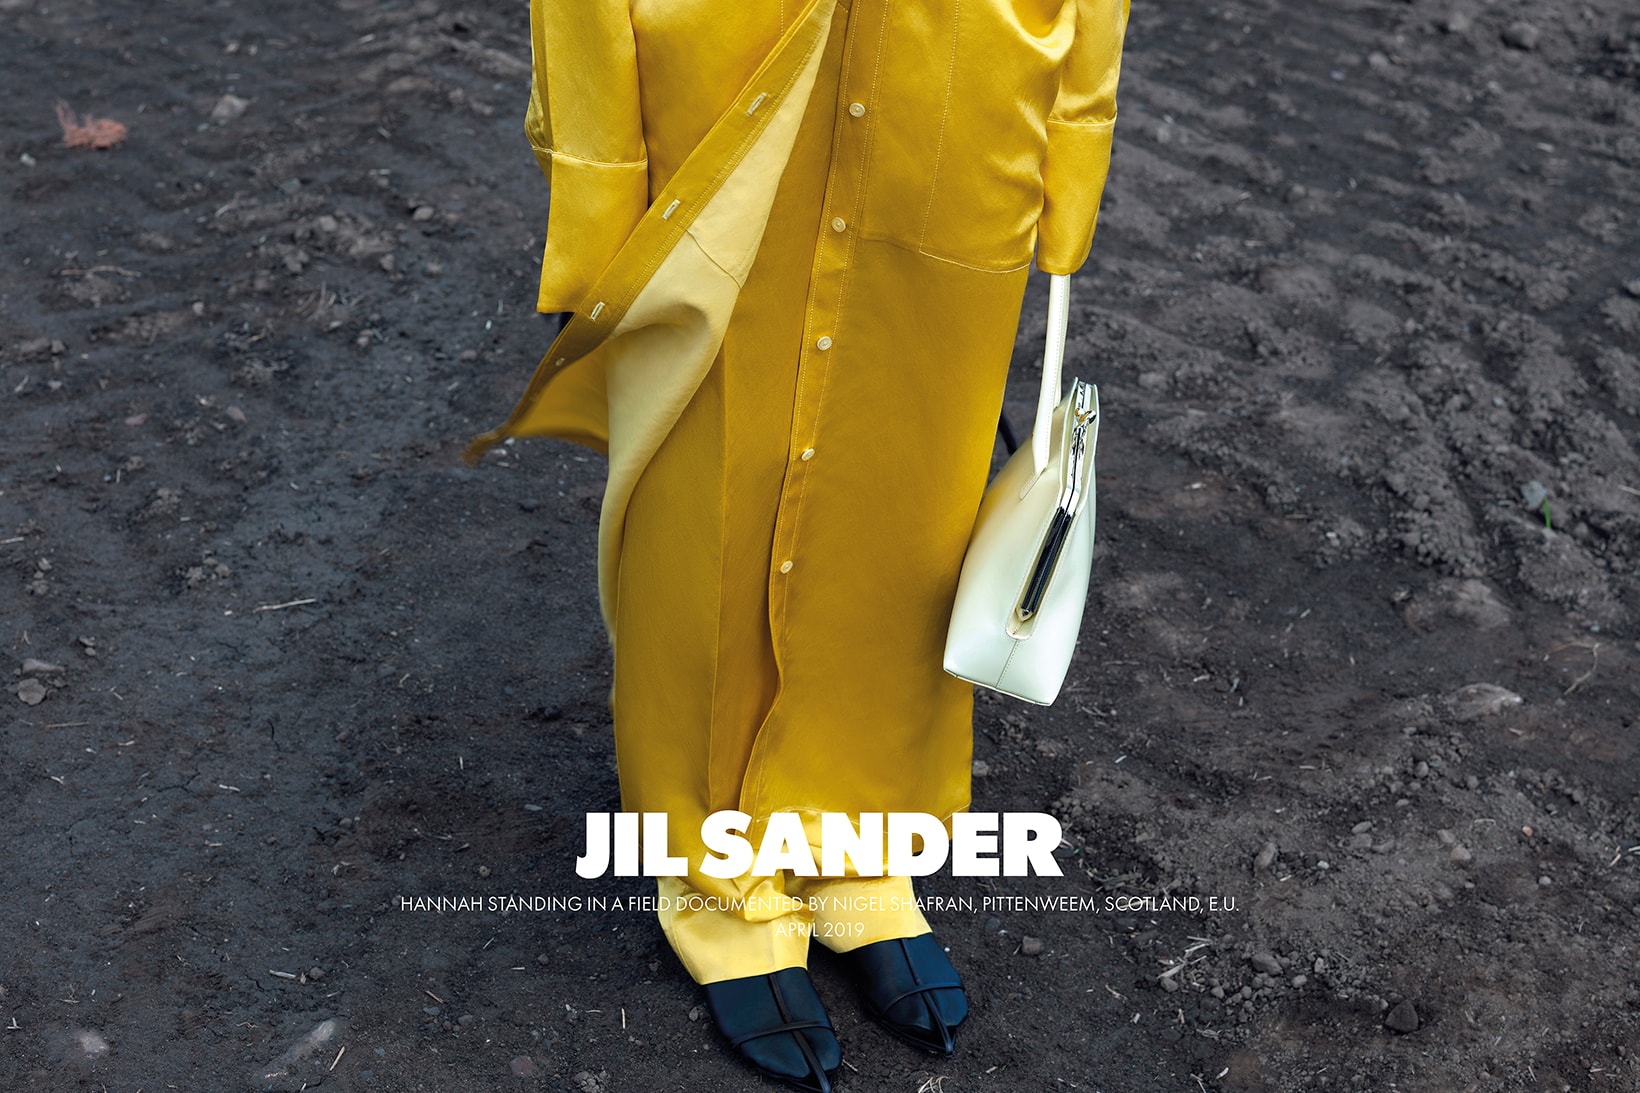 Jil Sander's FW19 Advertising Campaign | Hypebae